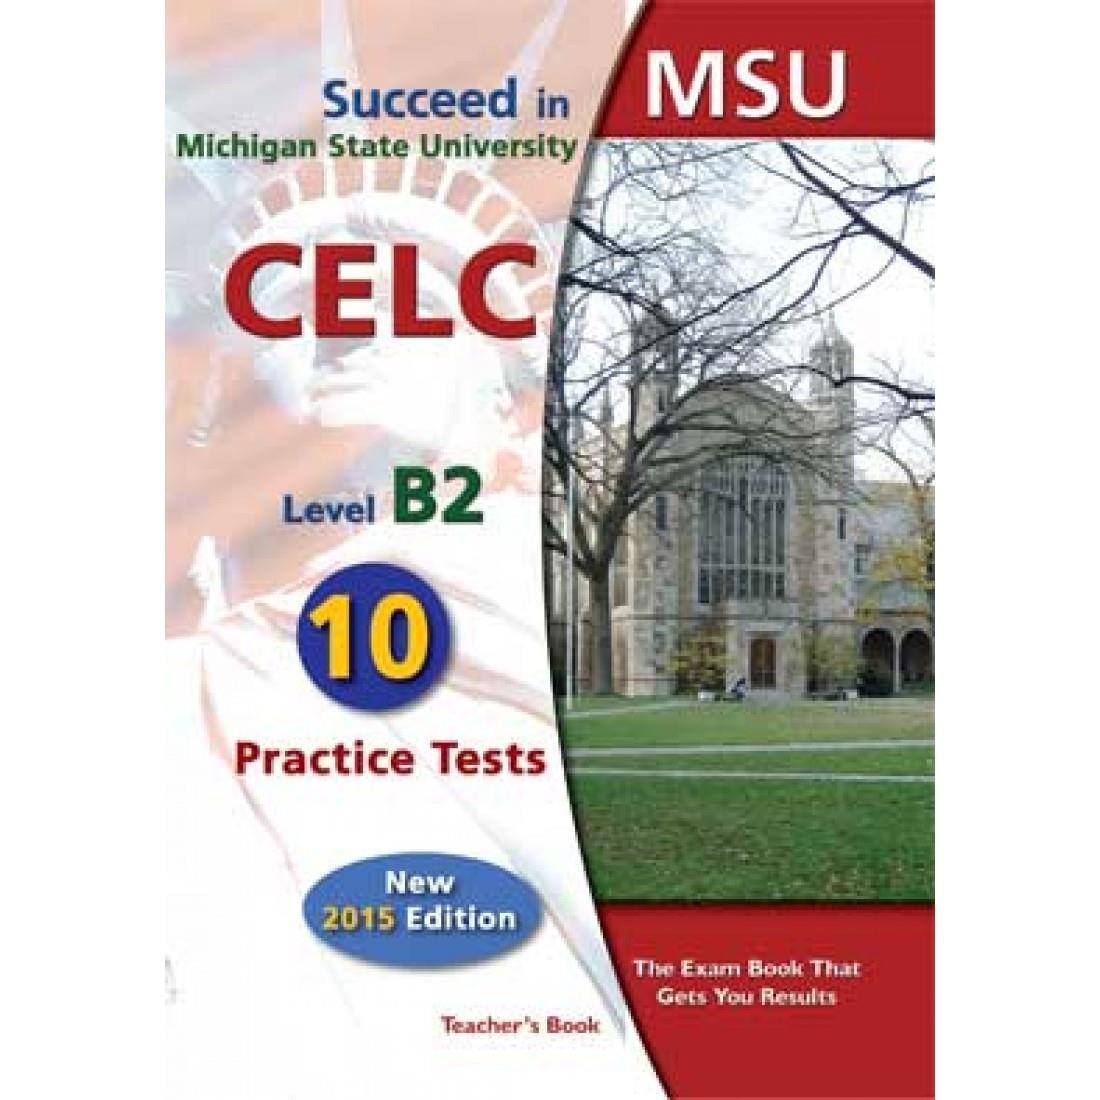 SUCCEED IN MSU CELC B2 10 PRACTICE TESTS TEACHERS